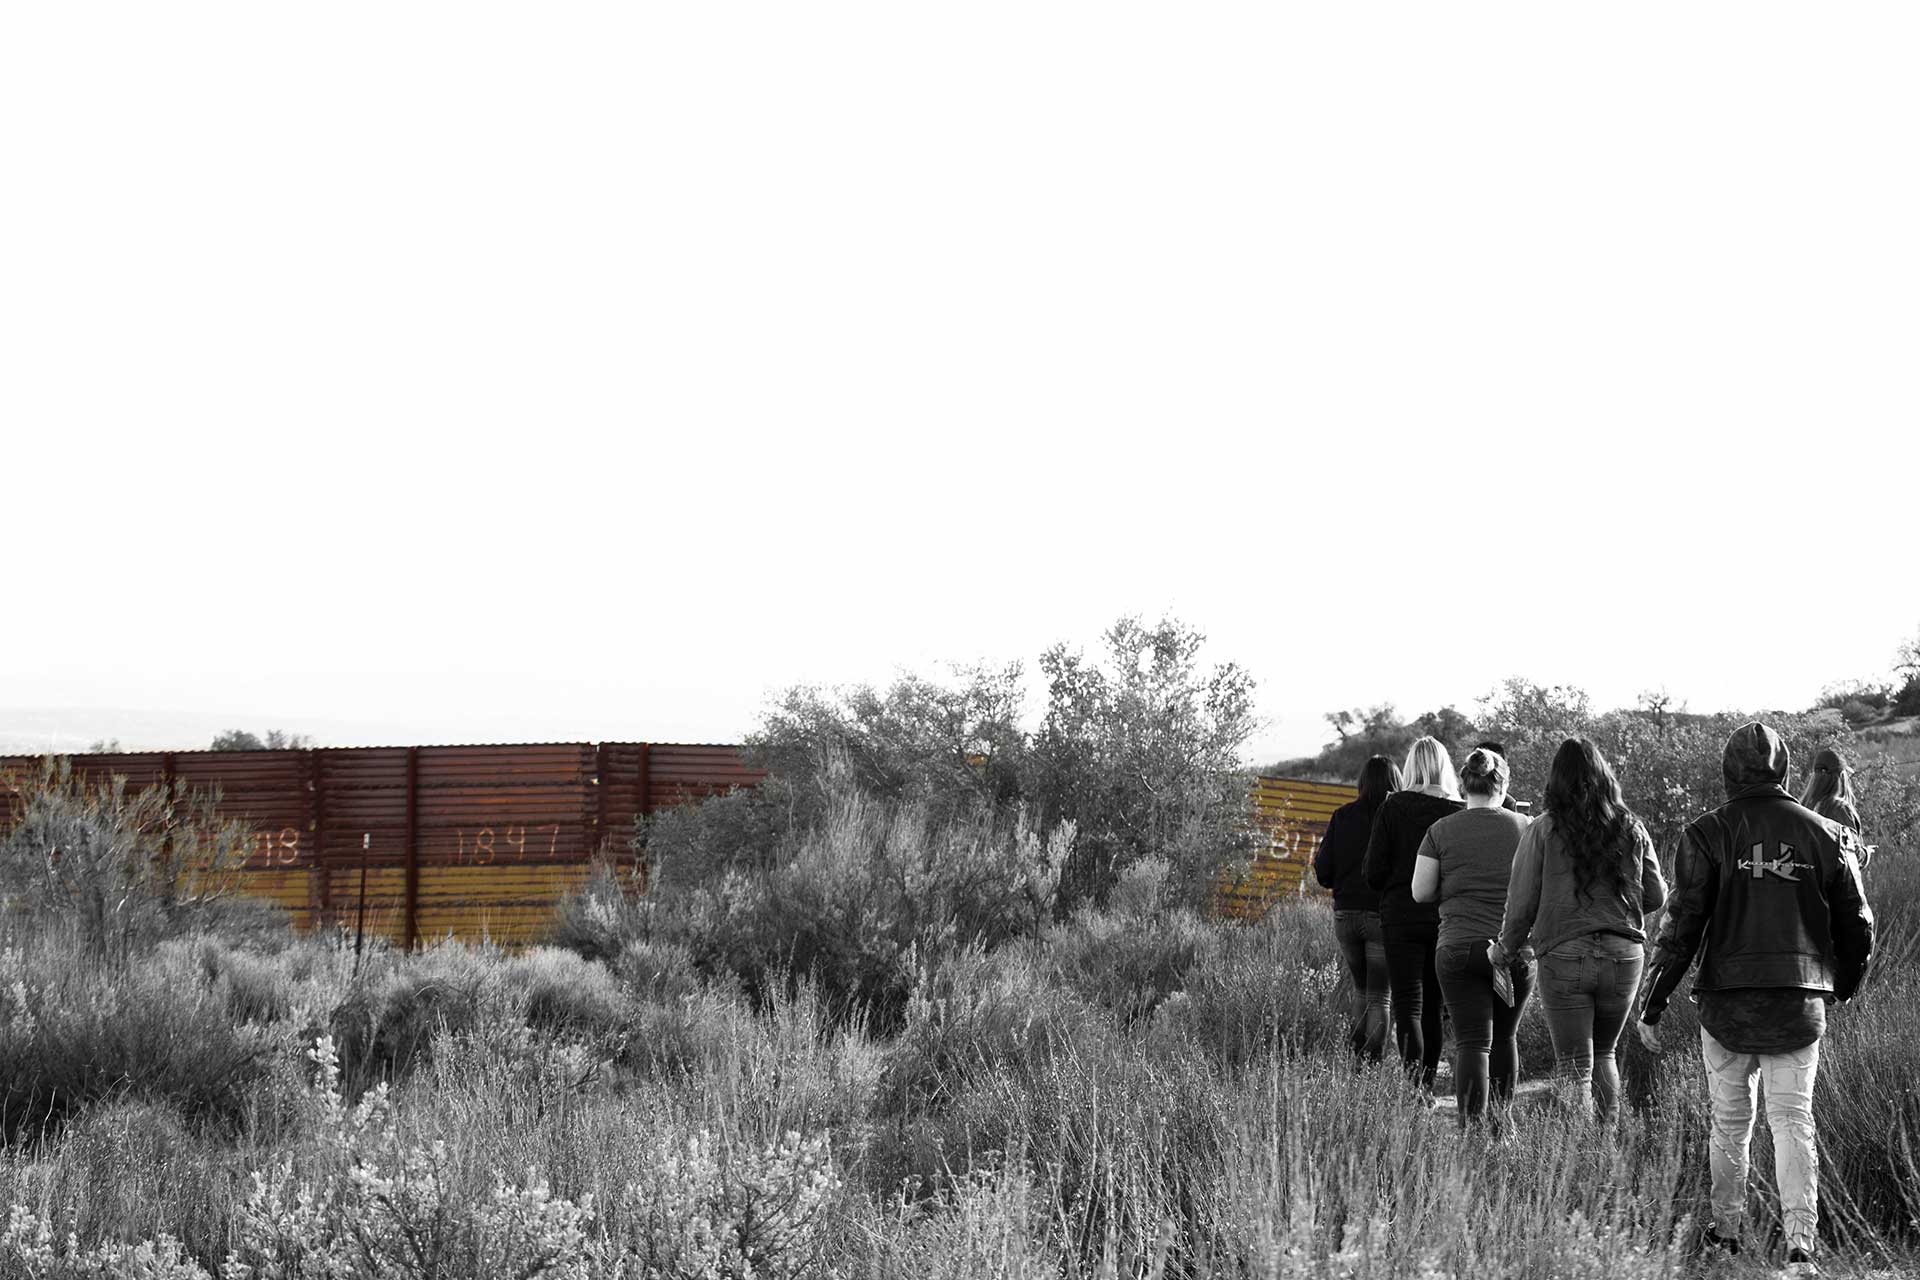 CSUF Students walk through the desert towards the border fence.